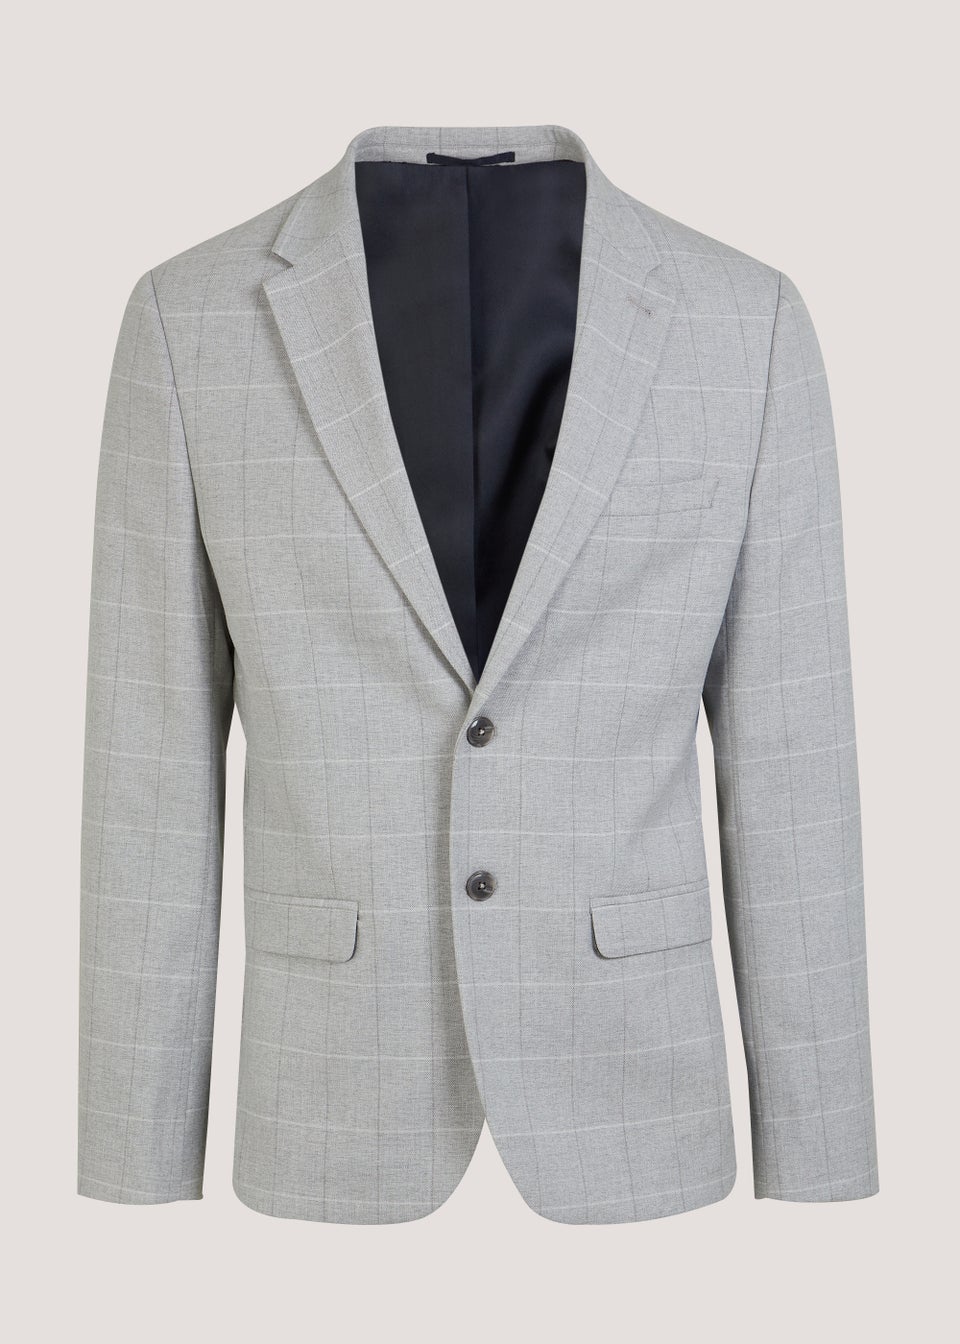 Taylor & Wright Grey Jackman Skinny Fit Suit Jacket